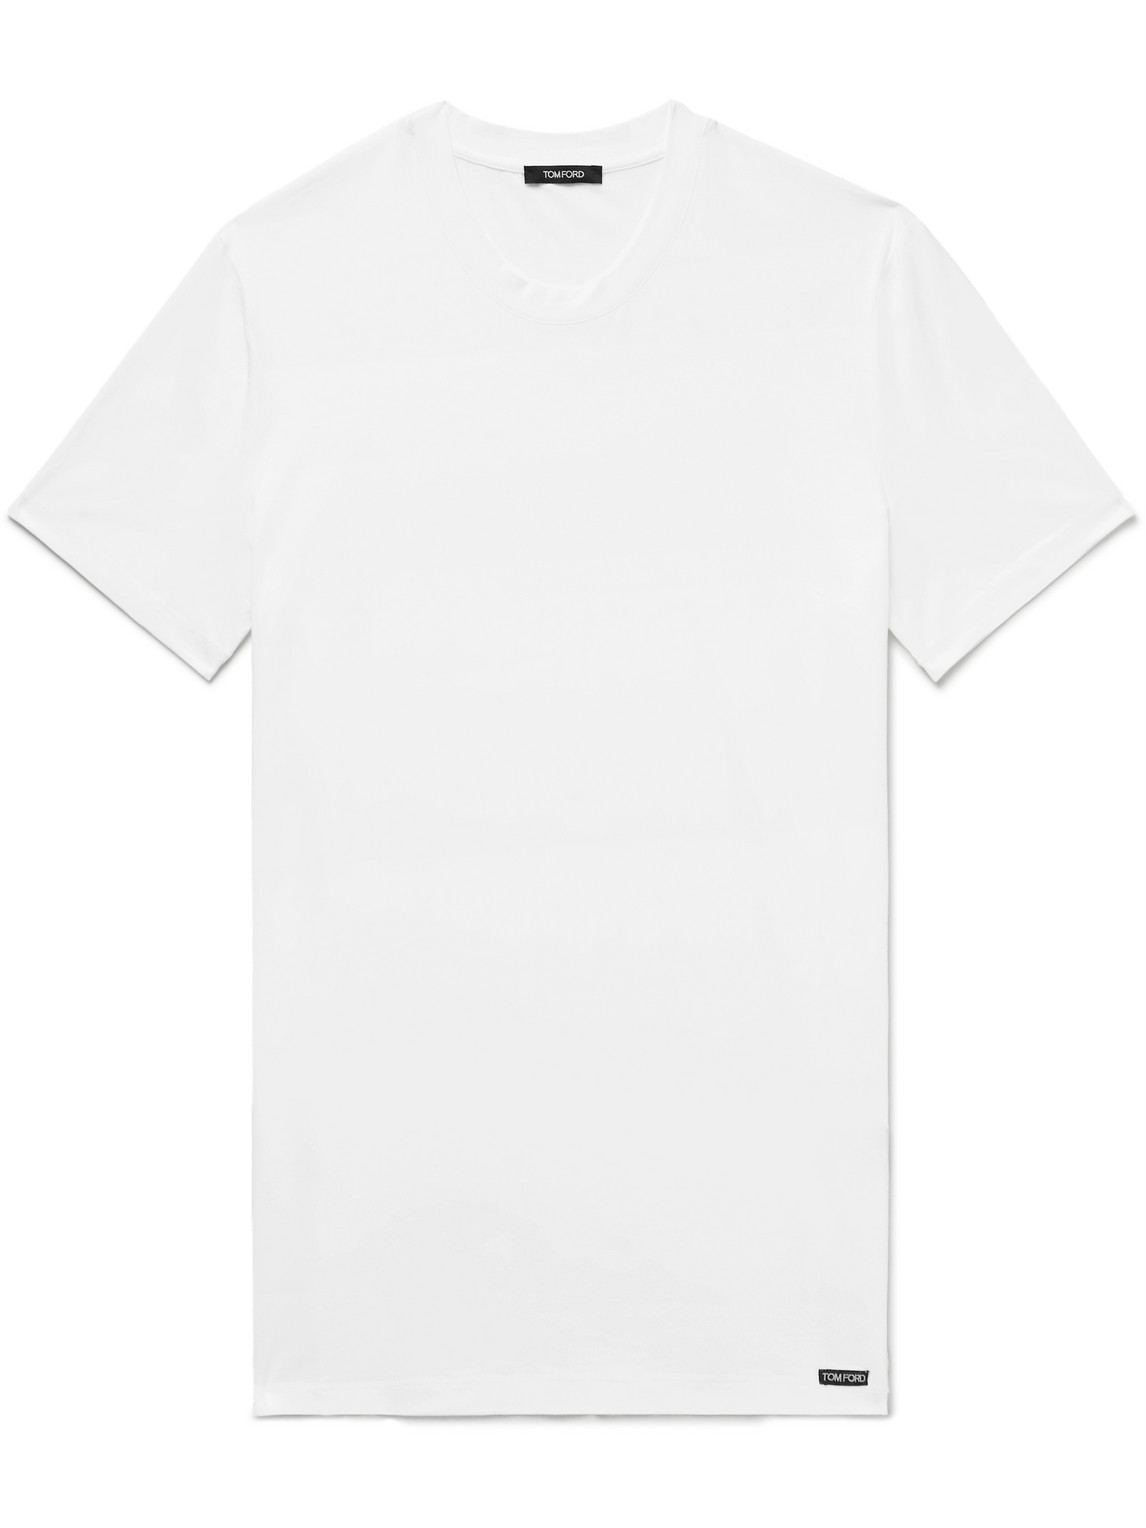 TOM FORD - Stretch Cotton and Modal-Blend T-Shirt - Men - White - S von TOM FORD